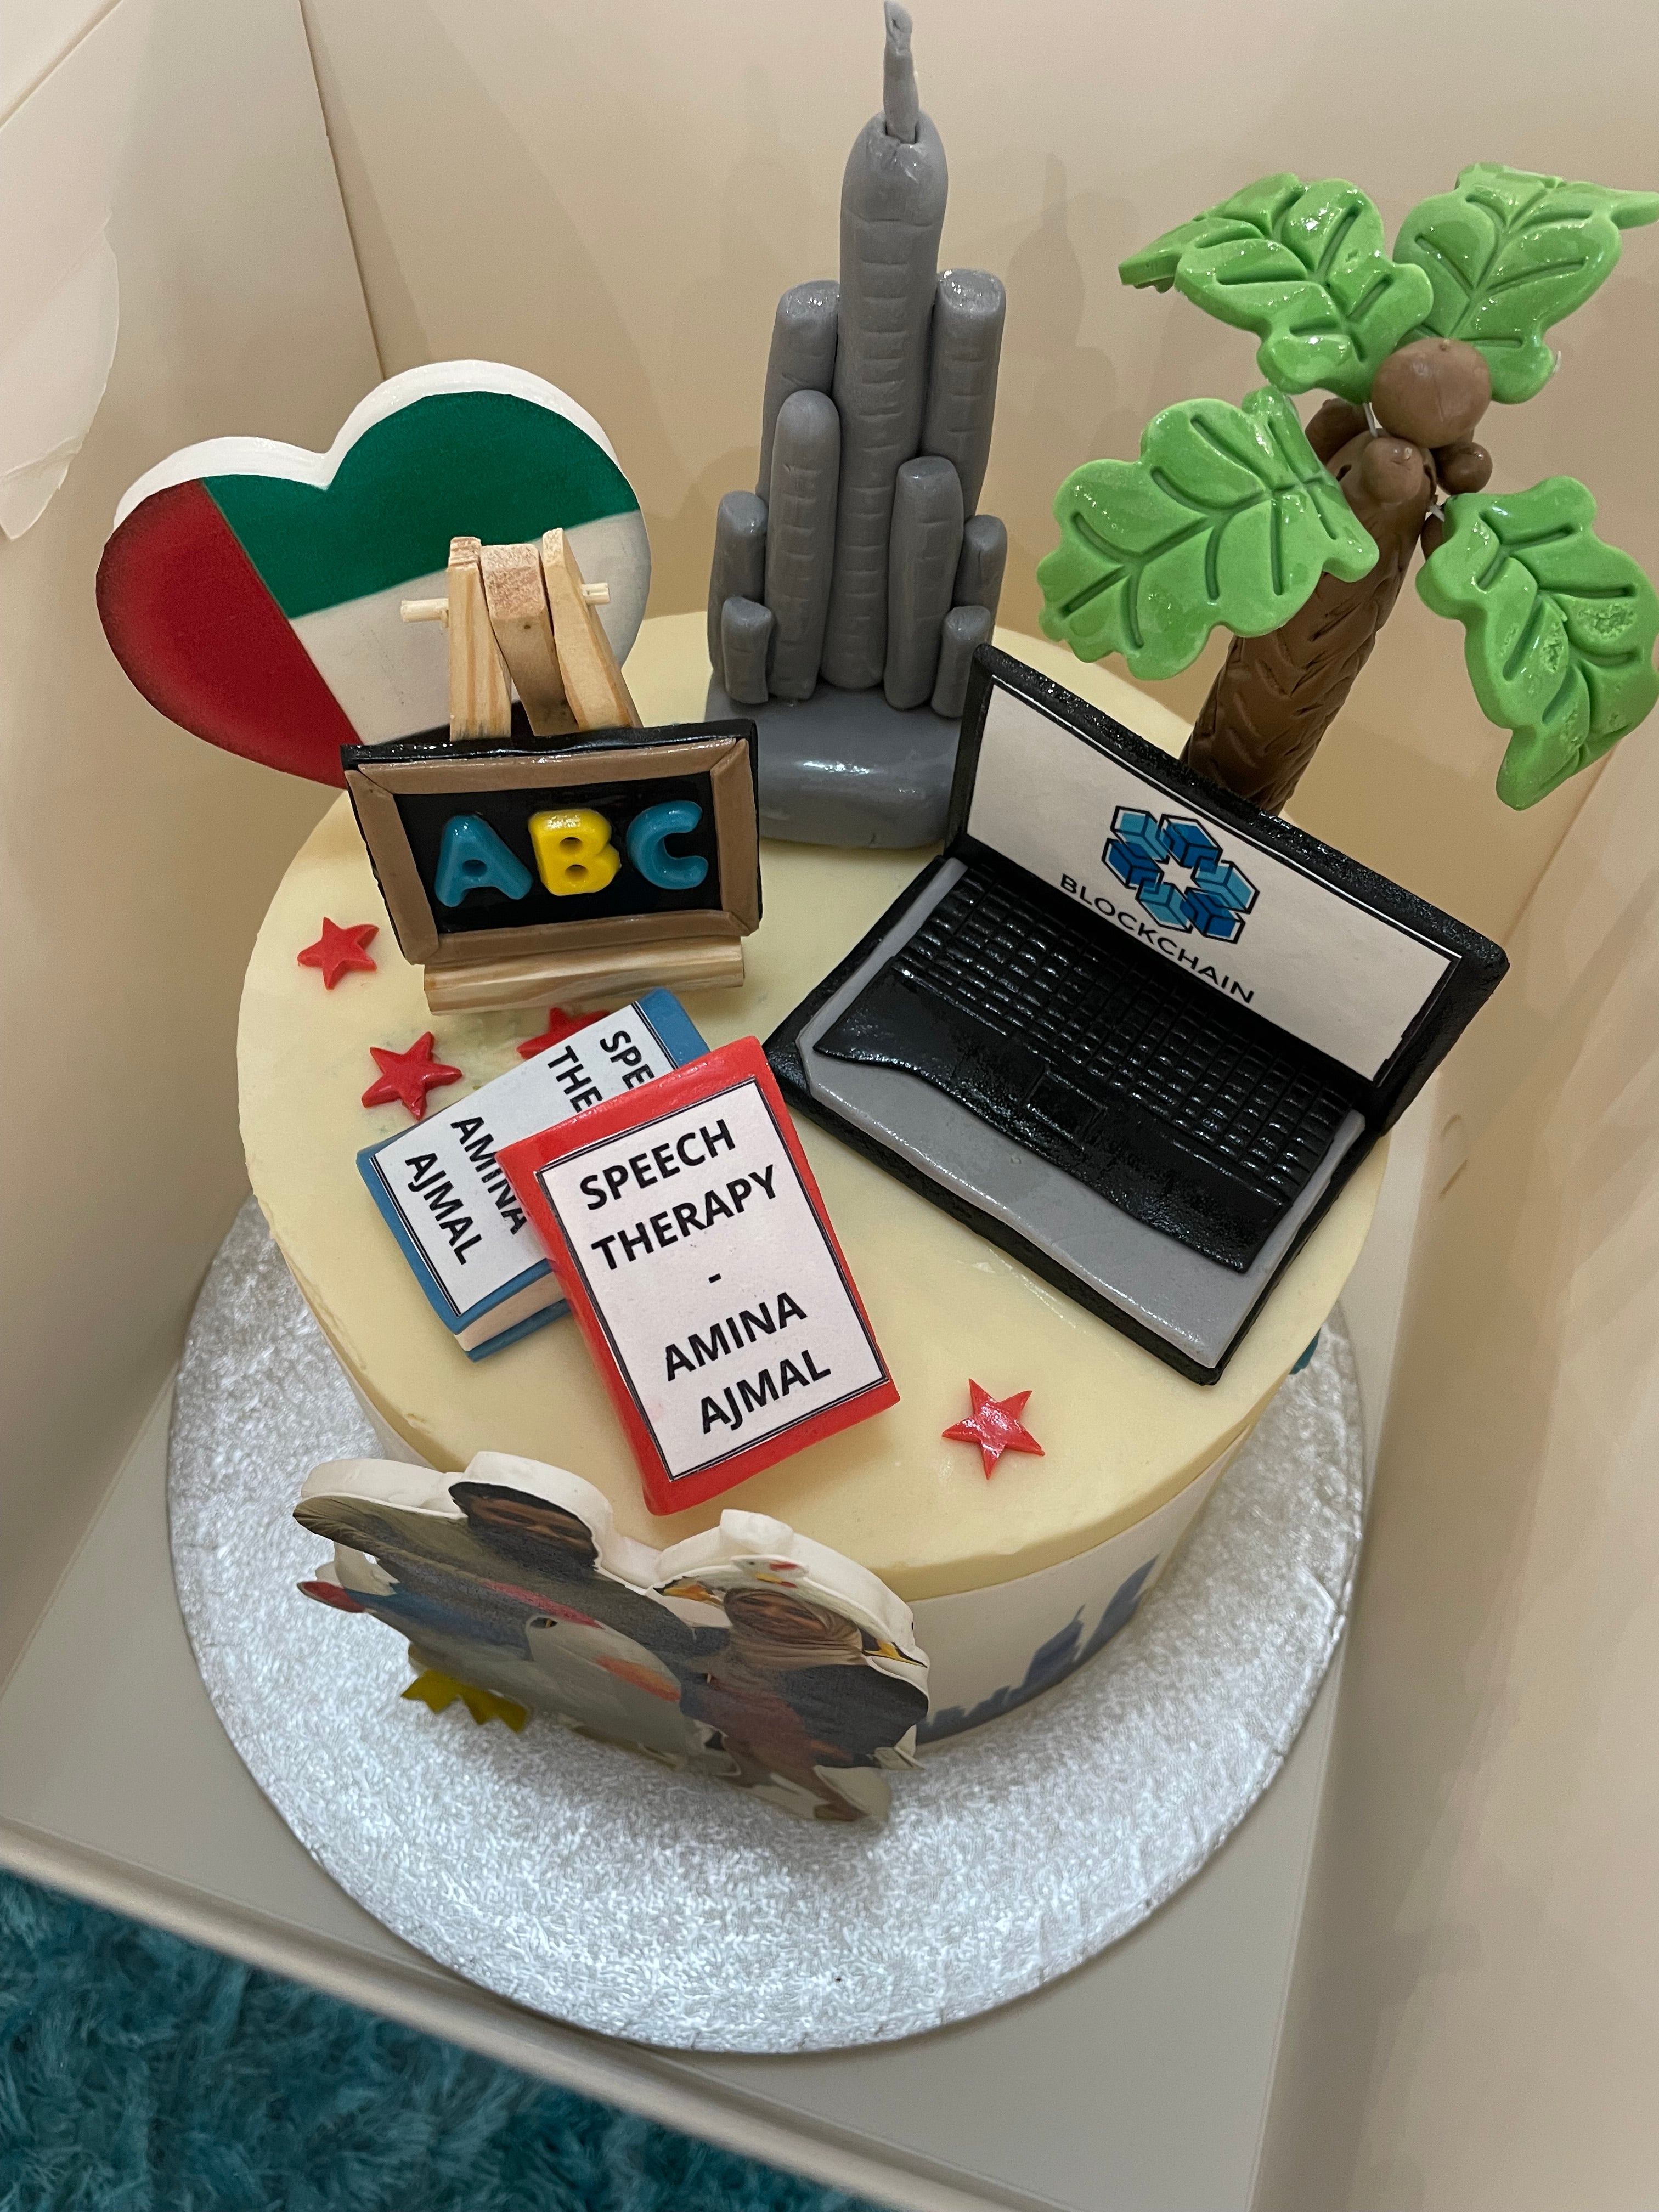 dubai cake - Google Search | Dubai